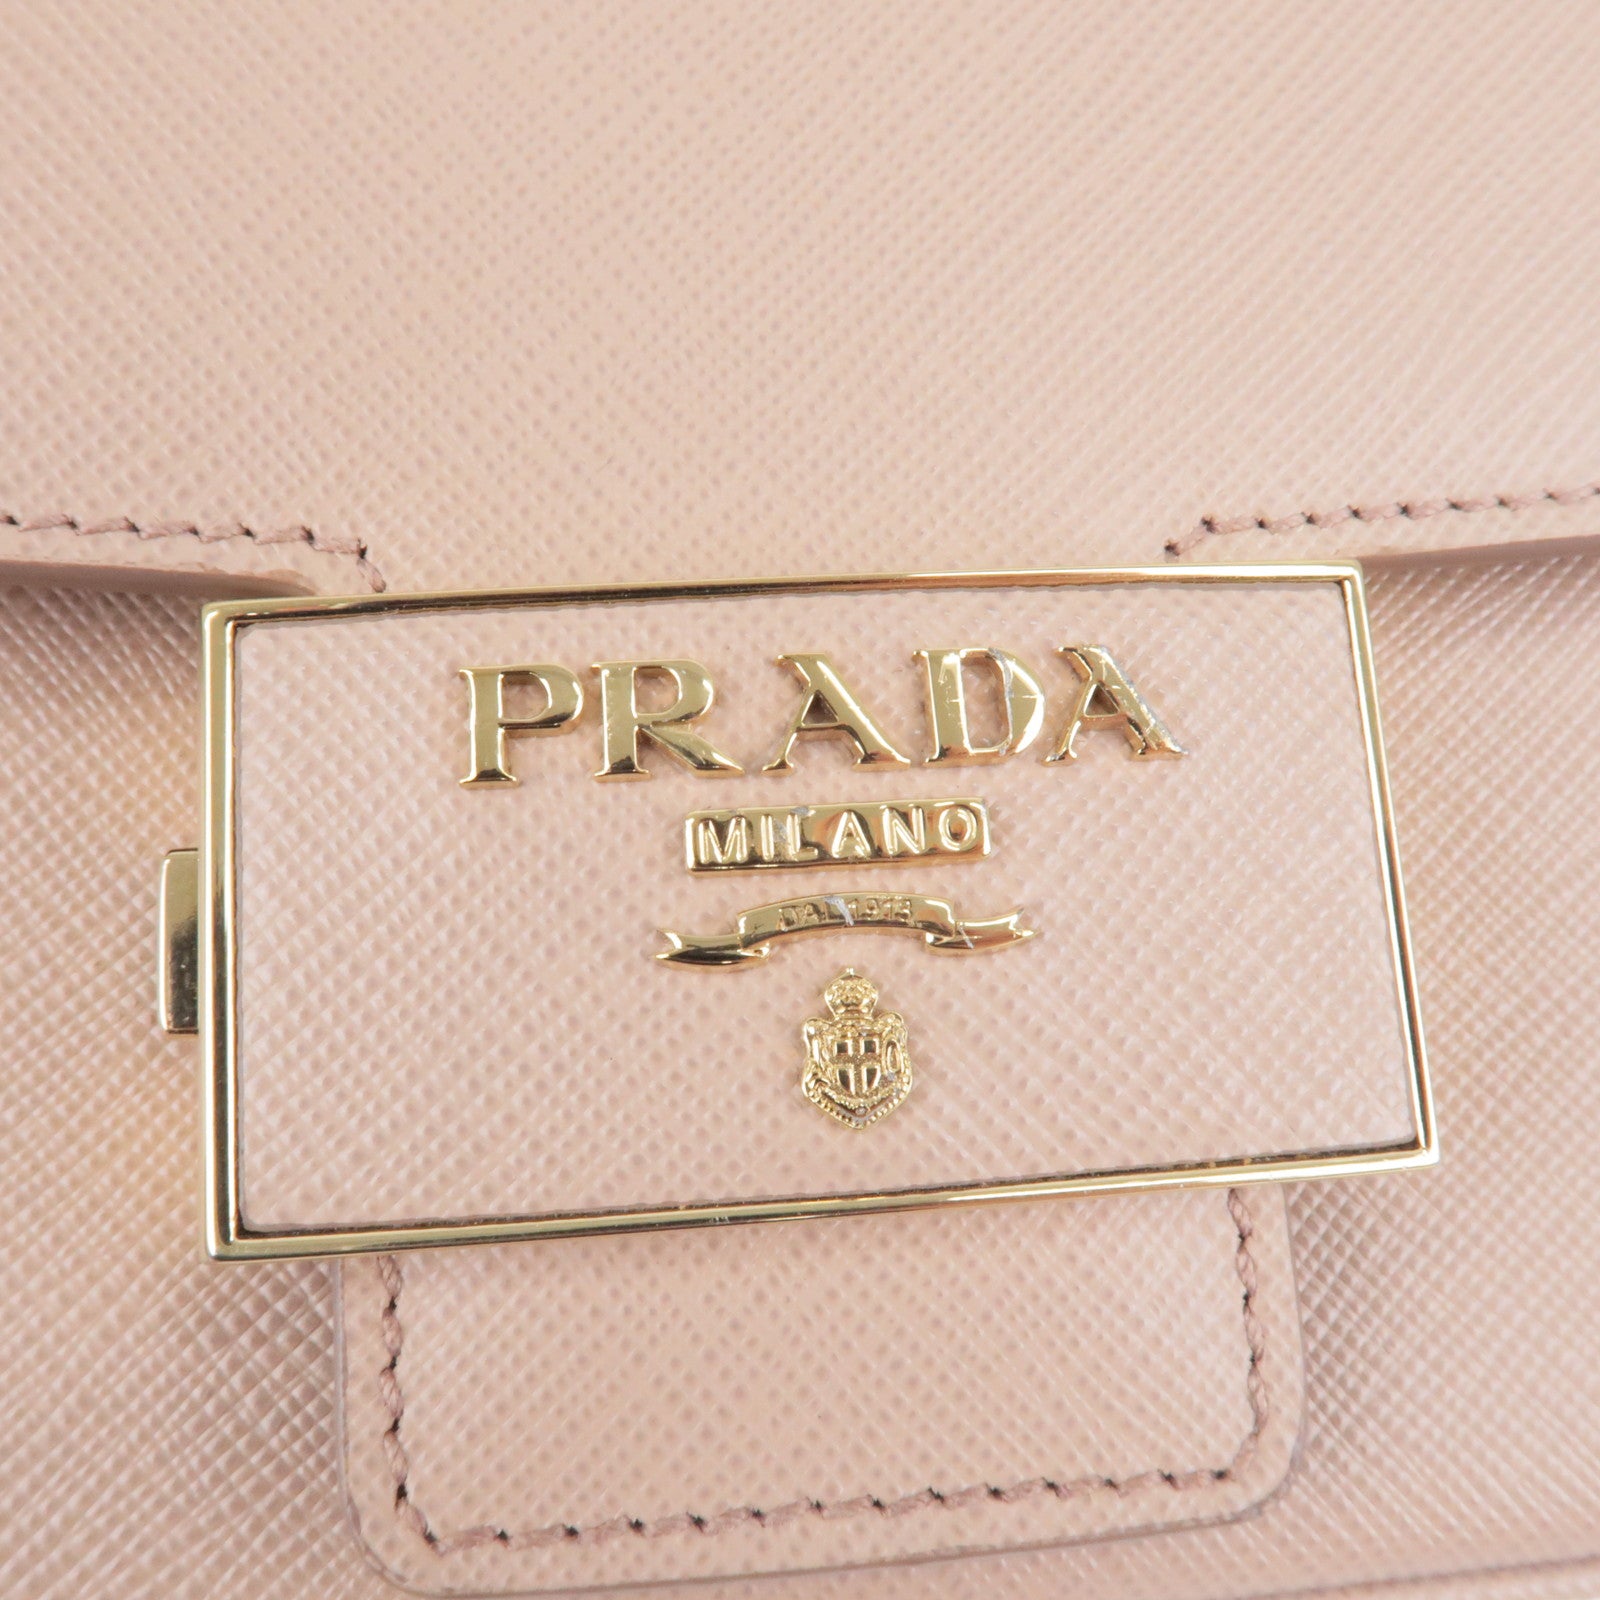 Prada Galleria leather micro bag for Women - Pink in Bahrain